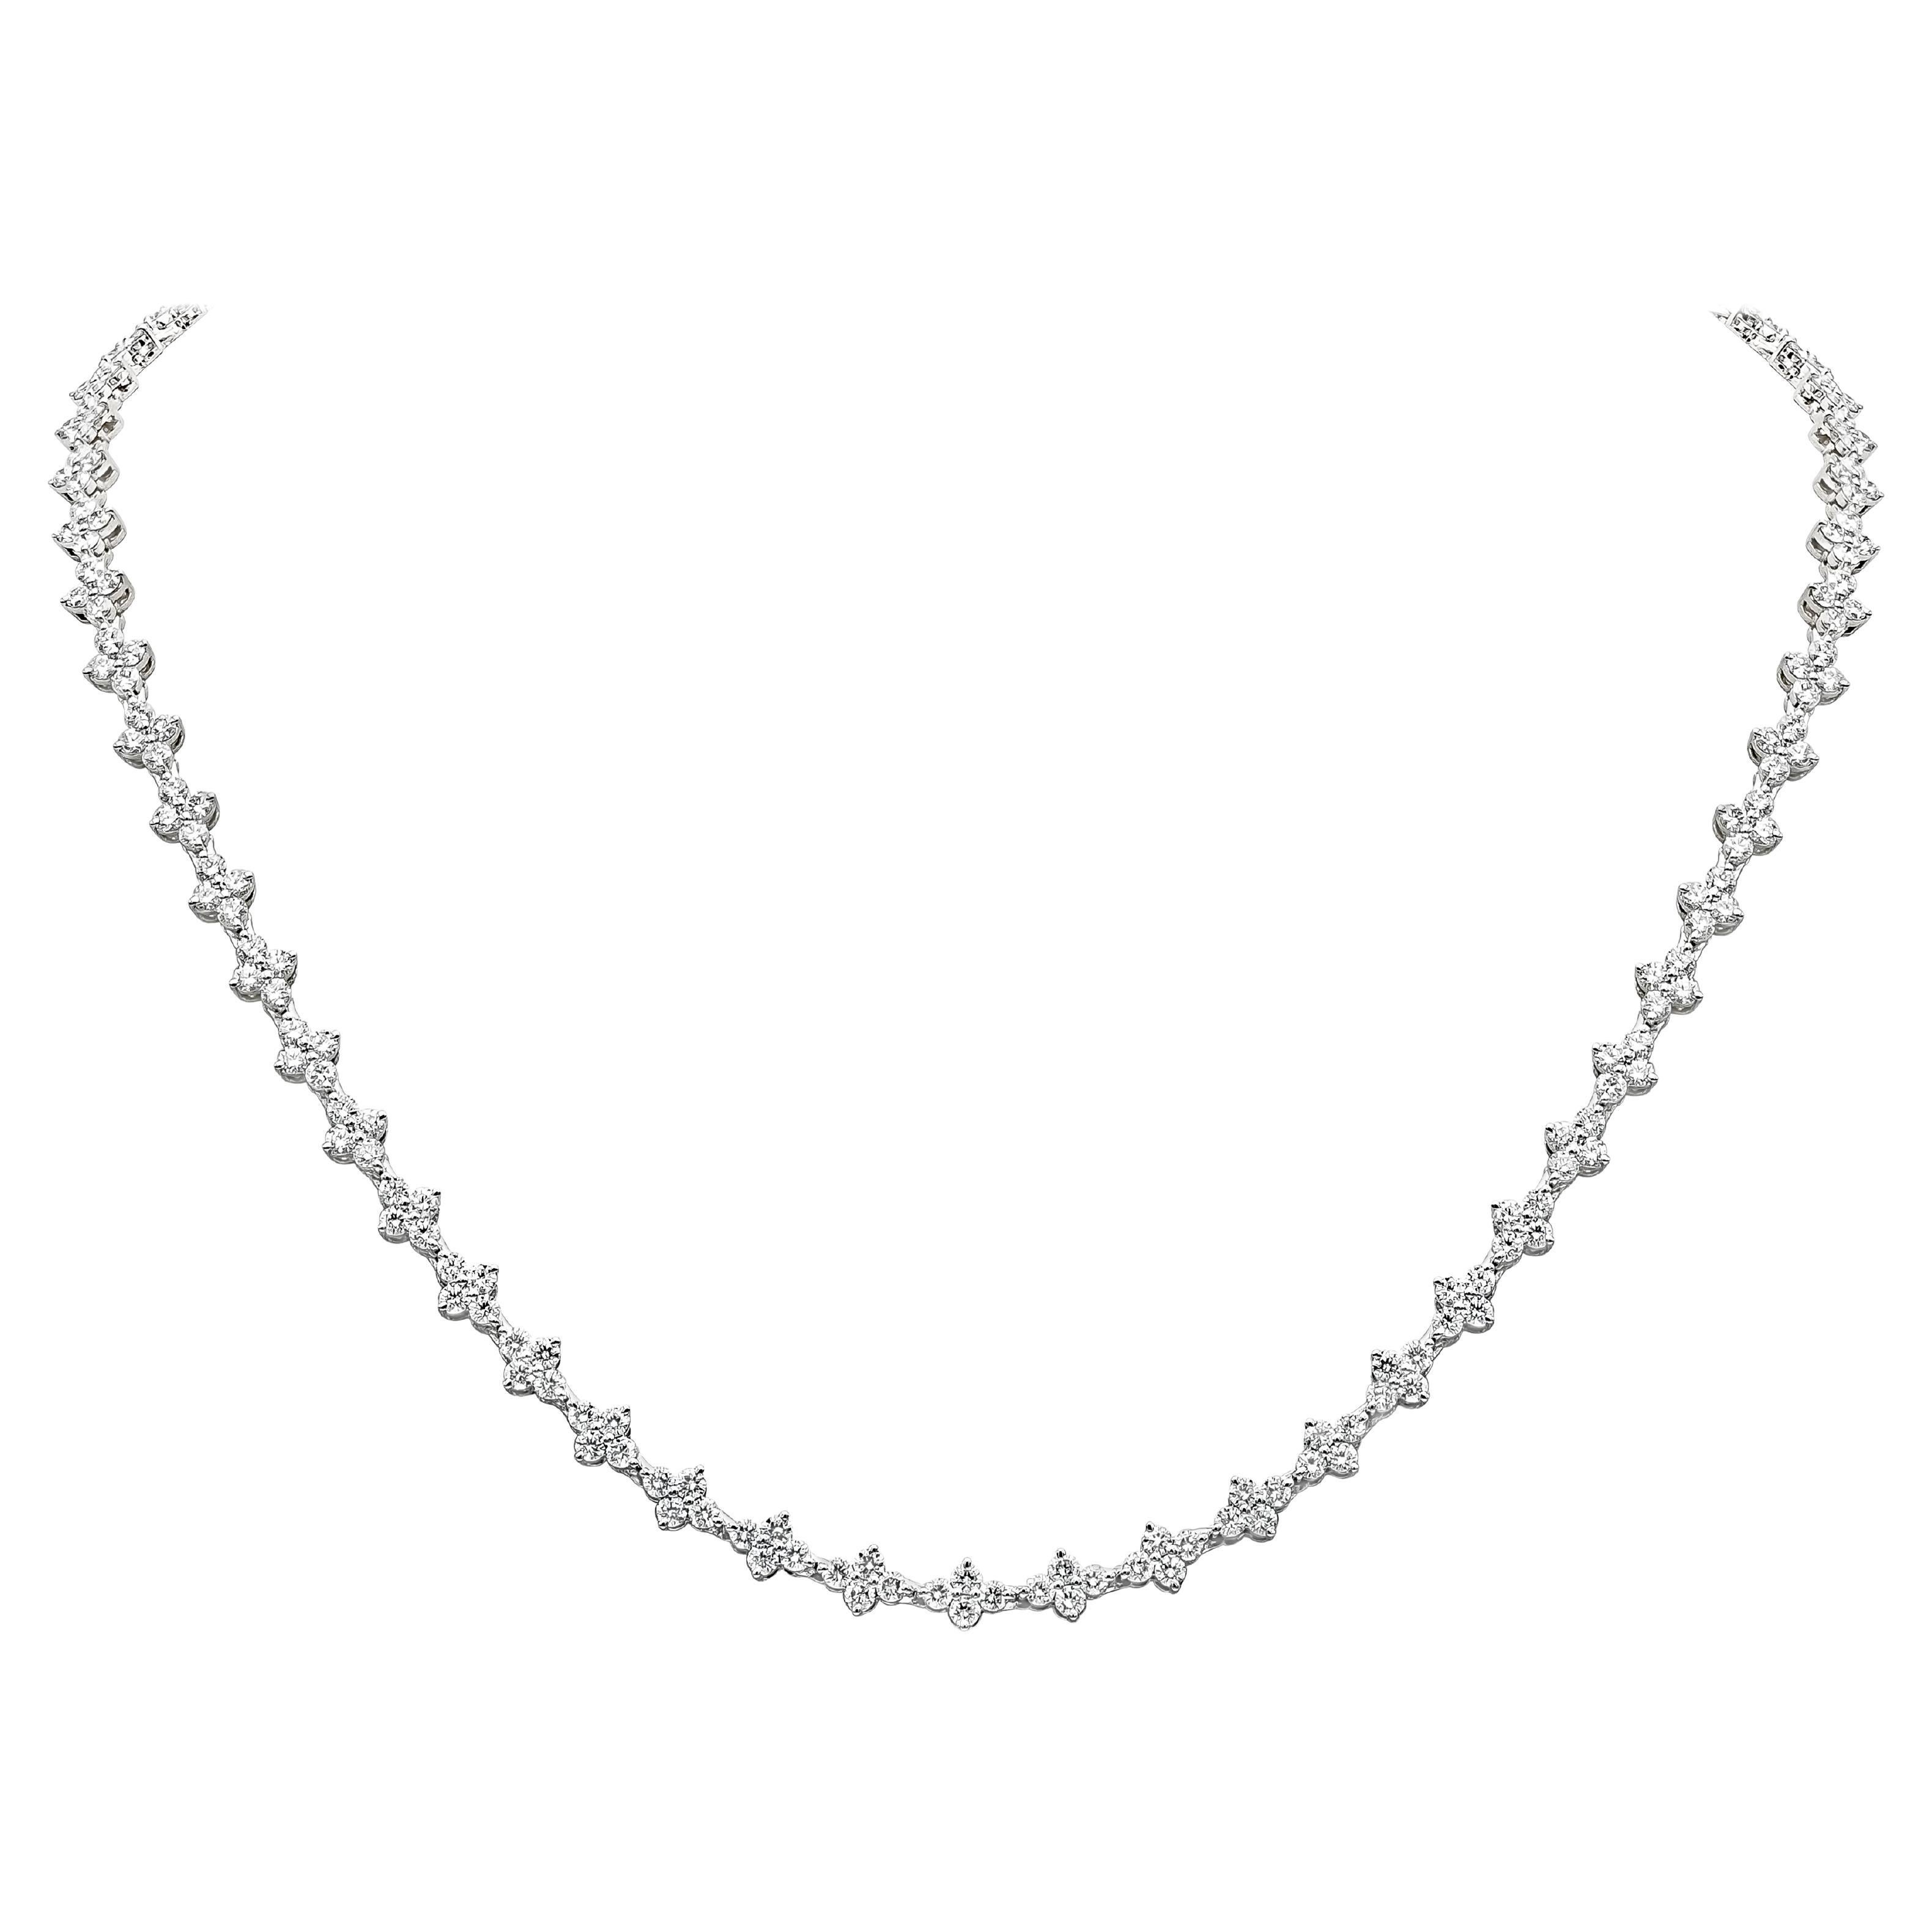 Roman Malakov 10.99 Carat Total Diamond Tennis Necklace in White Gold For Sale